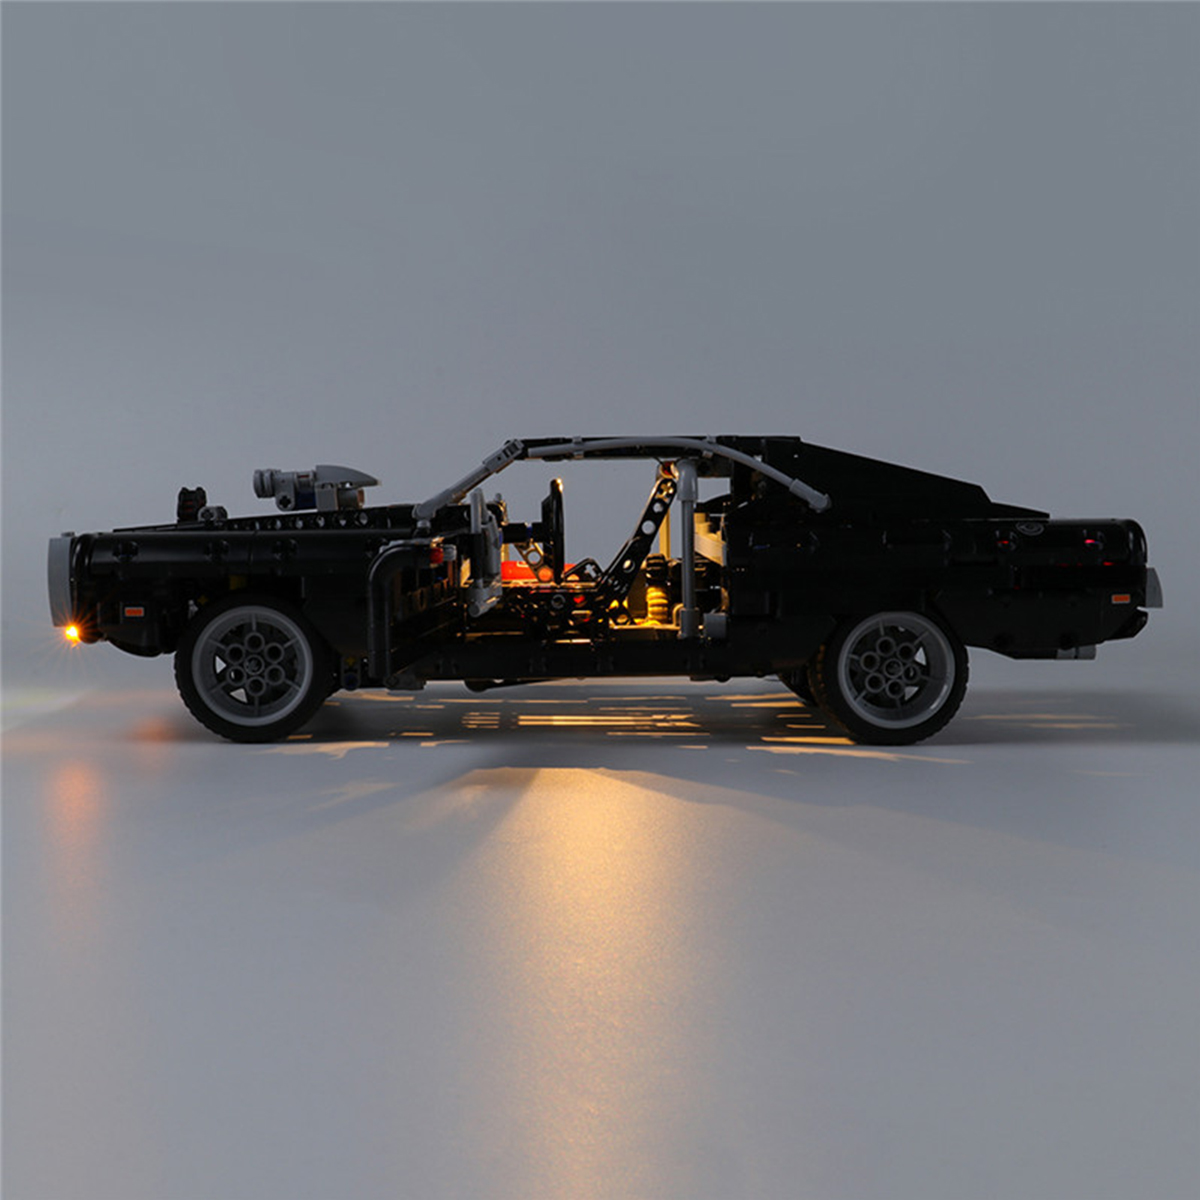 LED-Light-Lighting-Kit-Only-for-LEGO-42111-for-Doms-Dodge-Charger-Car-Bricks-Toy-1721042-4